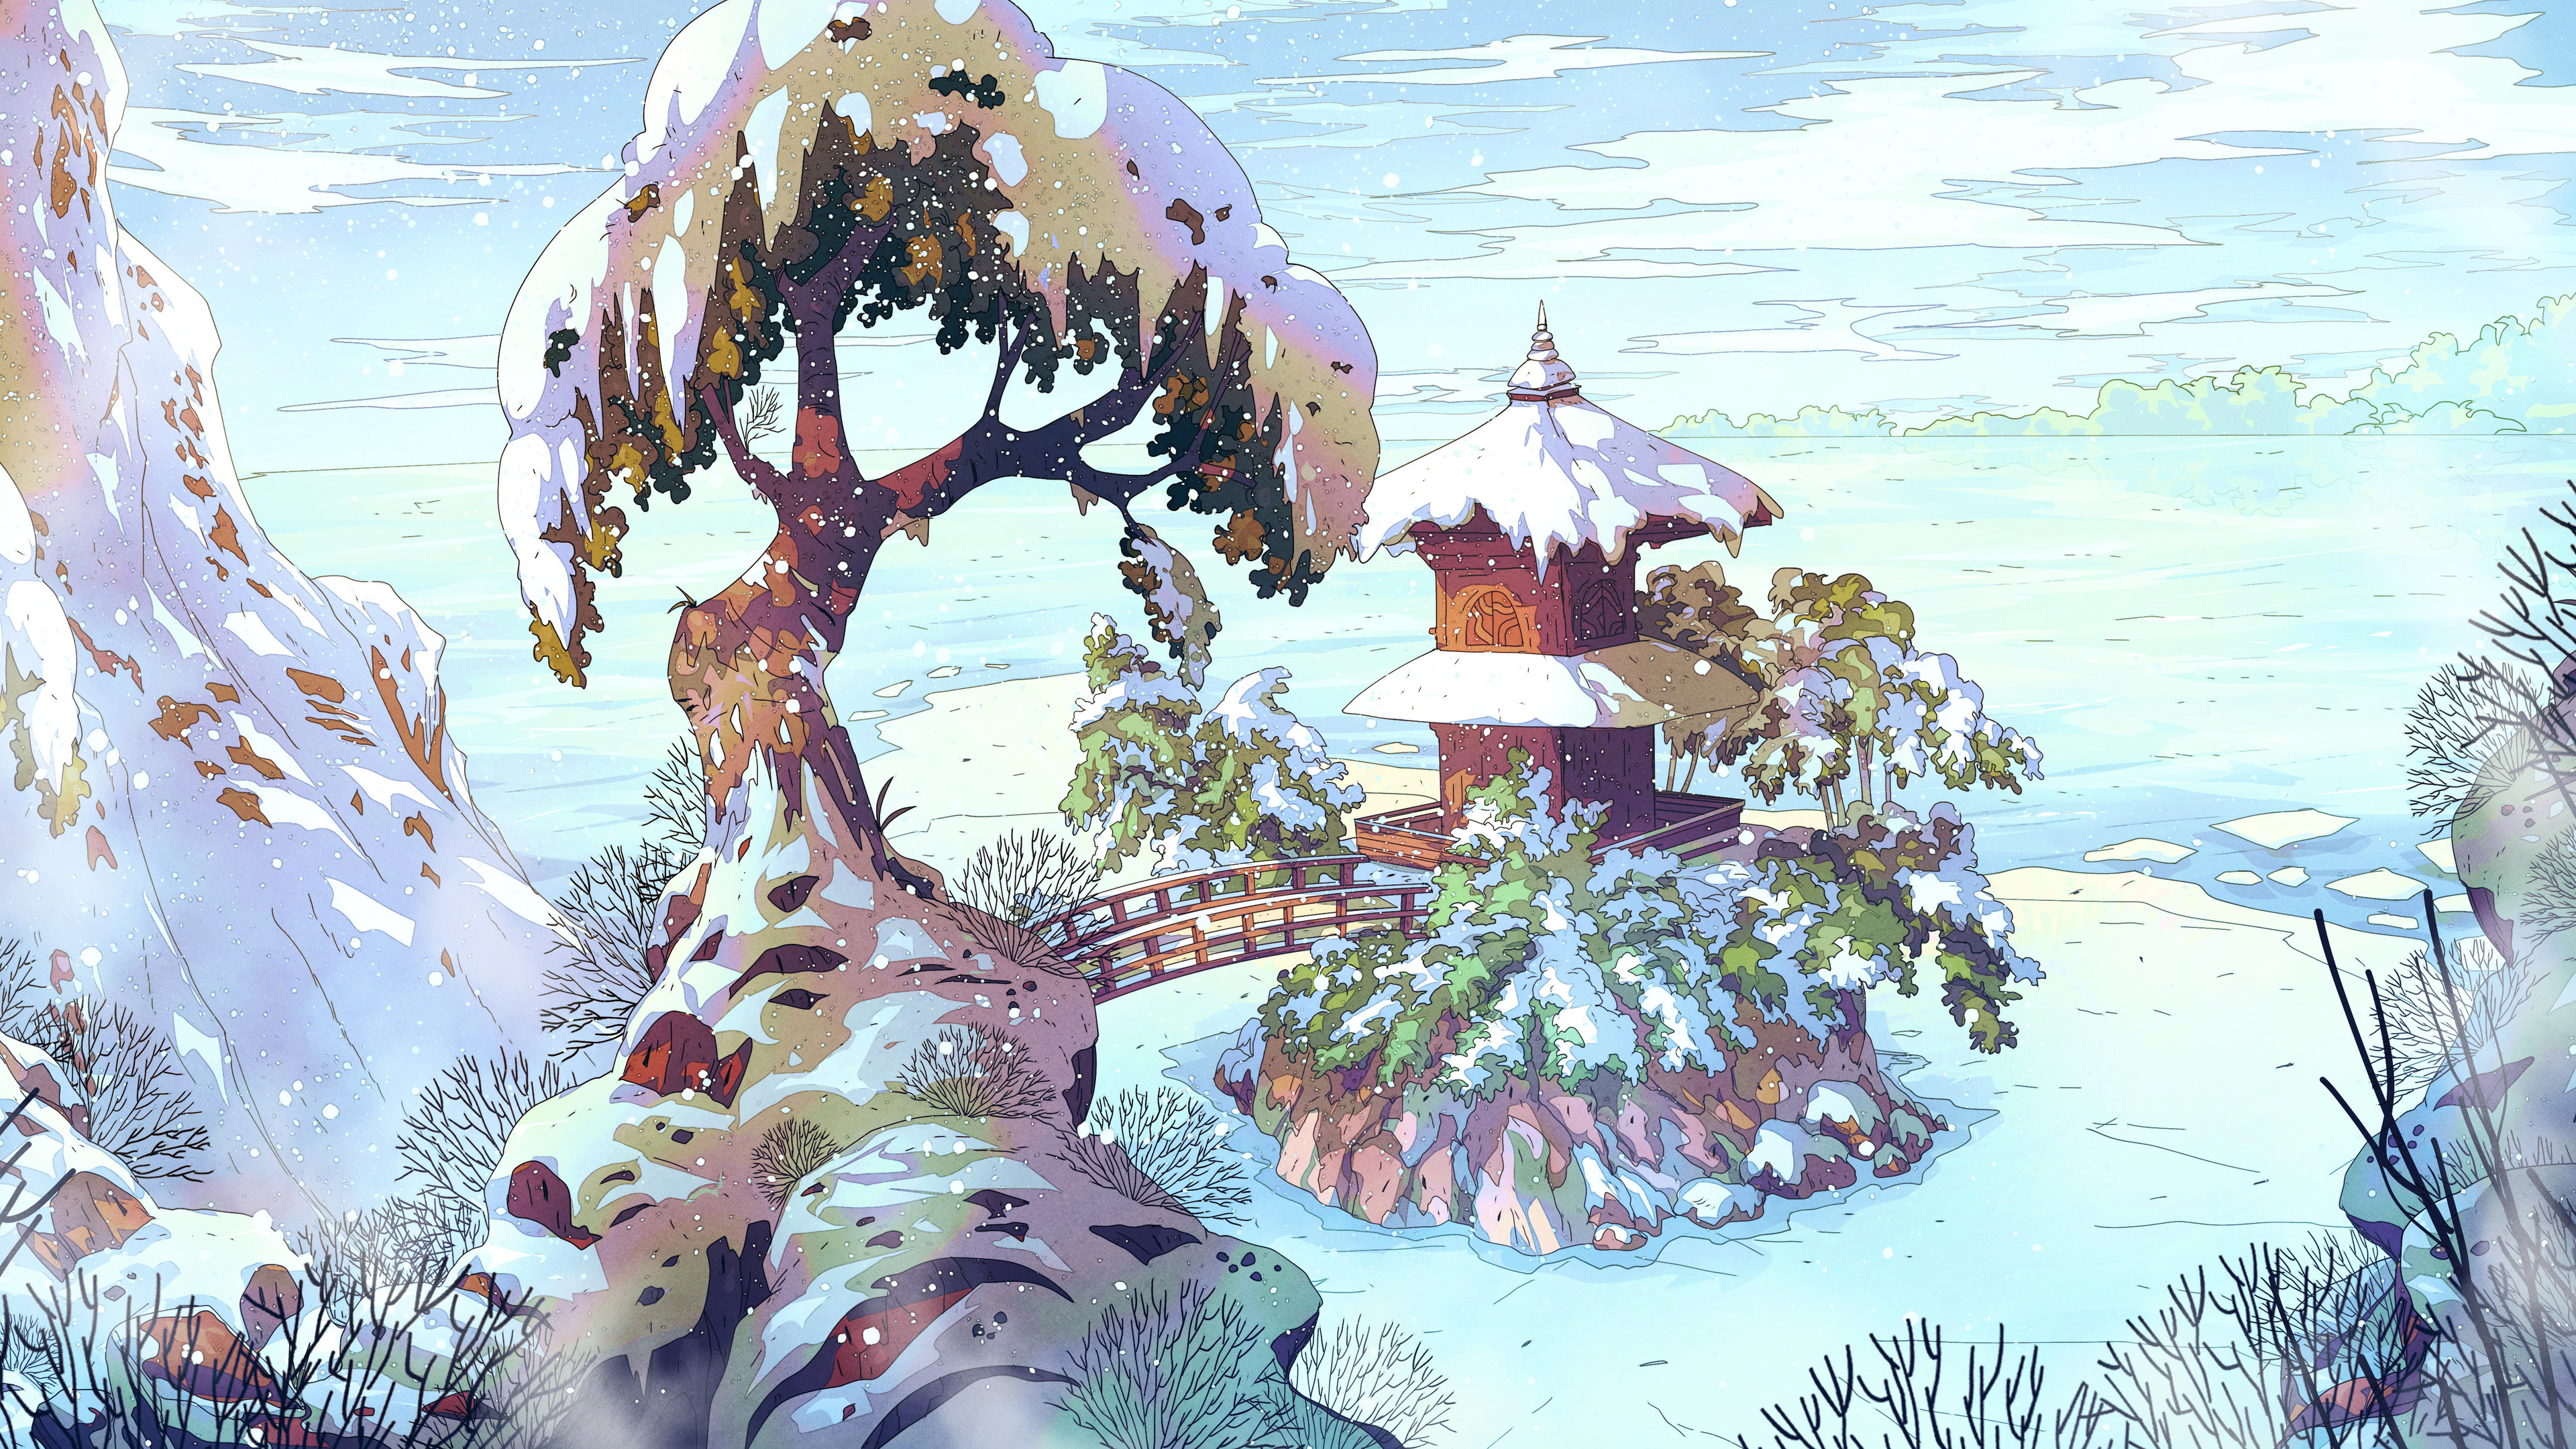 Christian Benavides Digital Art Fantasy Art Landscape Snow Shrine Asian Architecture Artwork 3840x2160